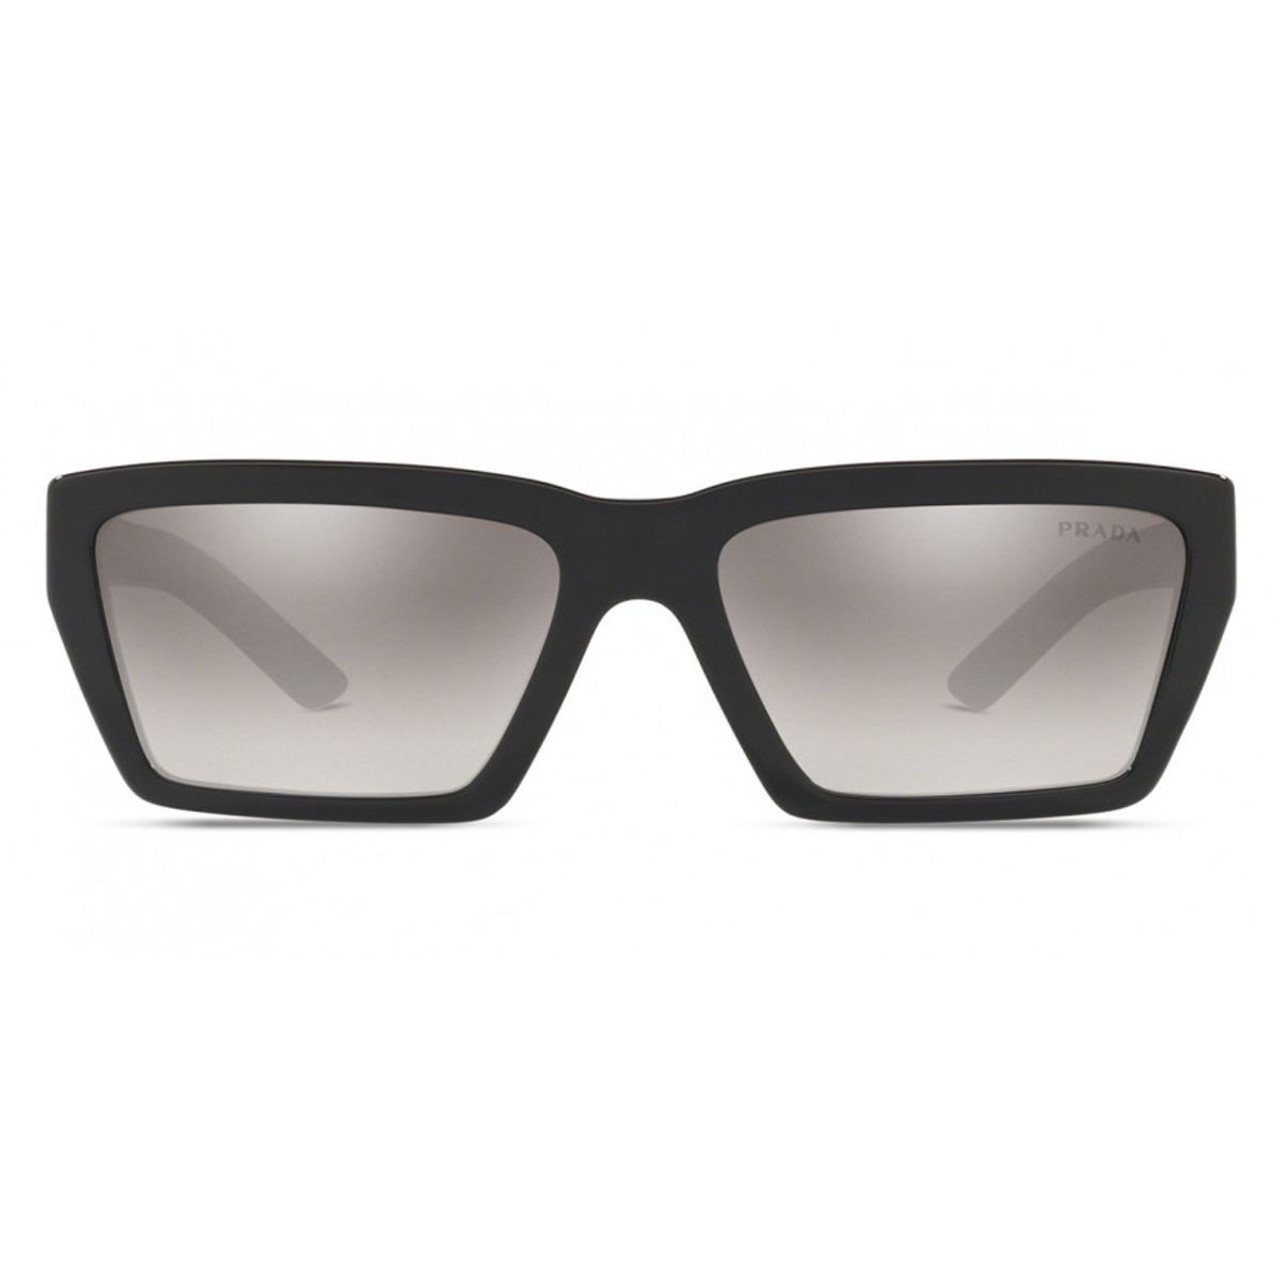 Prada® Sunglasses Collection product image